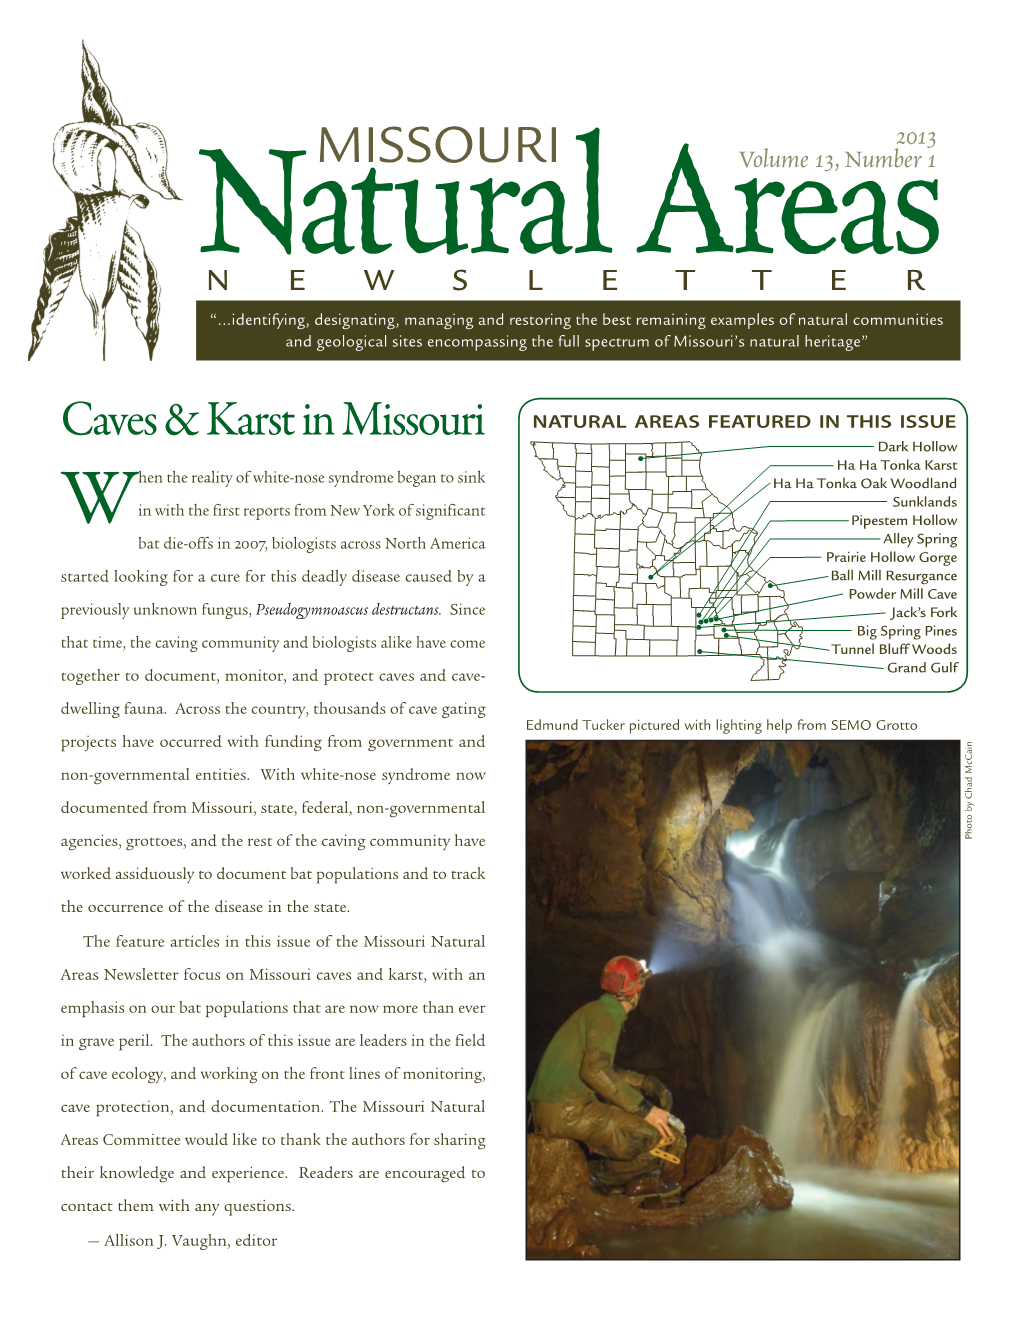 Missouri Natural Areas, Volume 13, Number 1, 2013